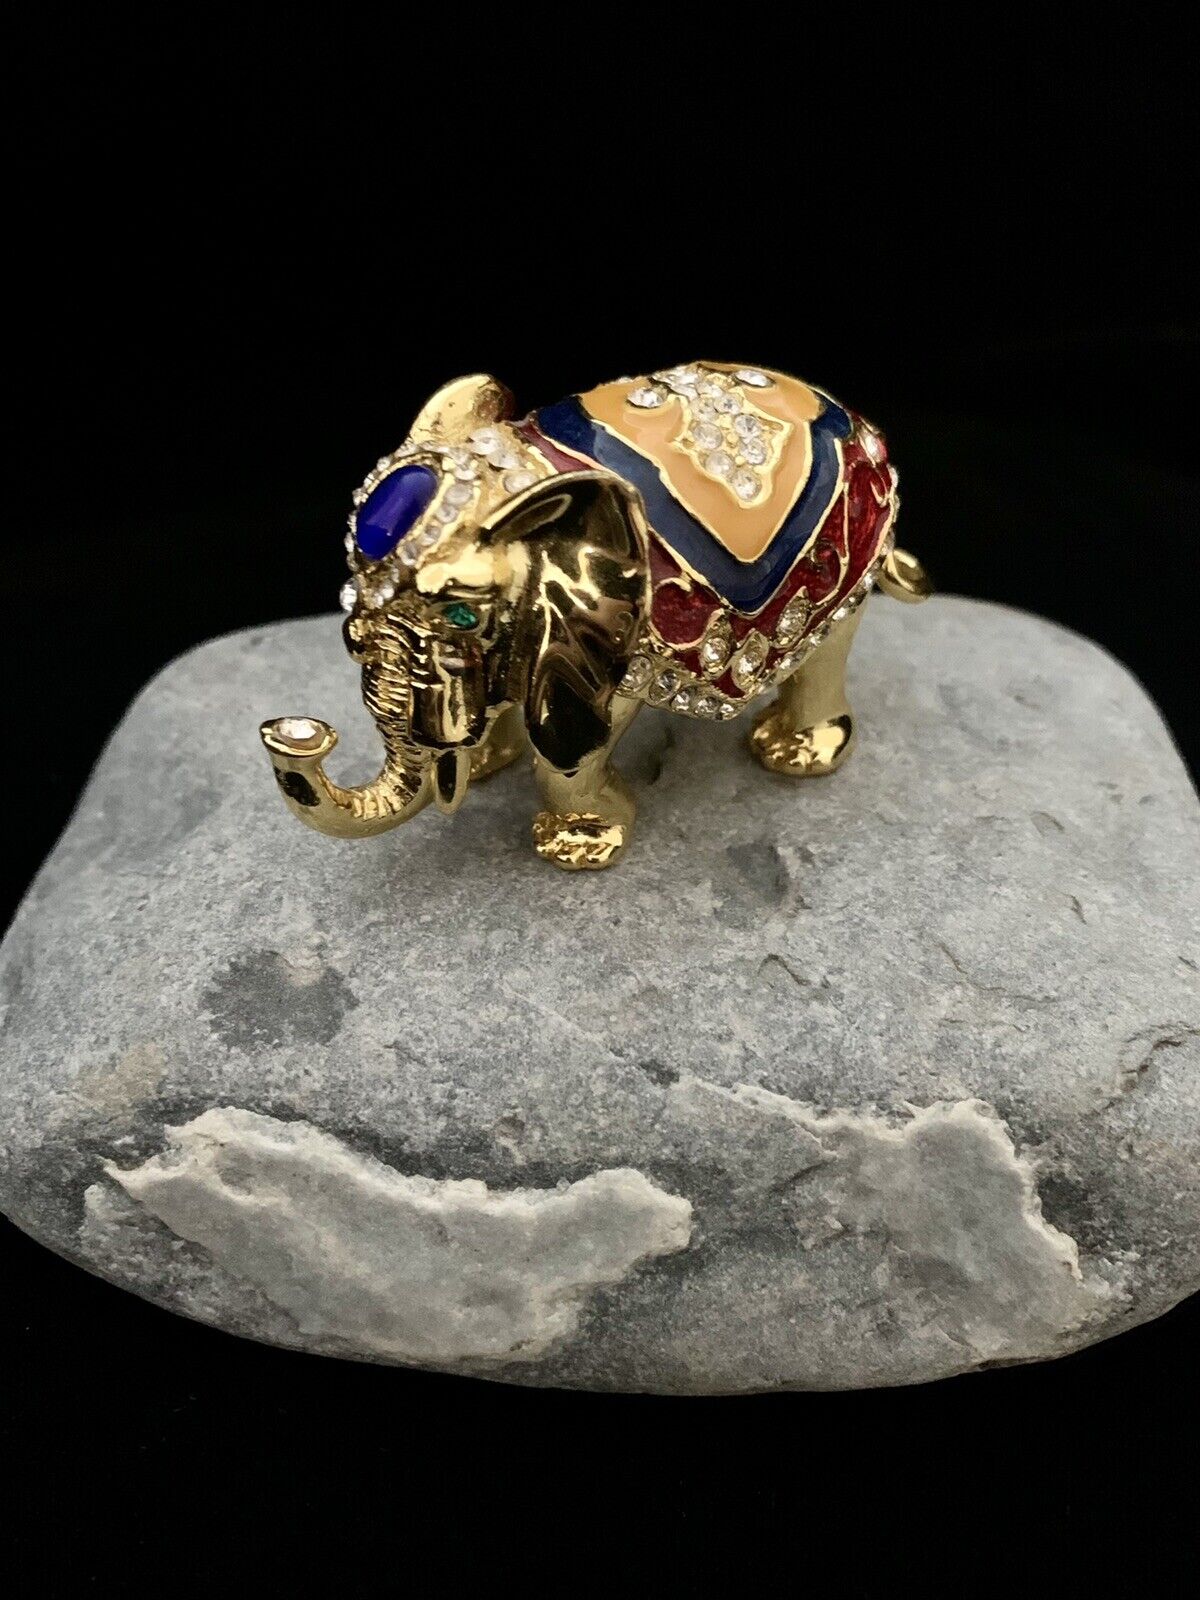 Bejeweled Victory Elephant Figurine Trinket Box